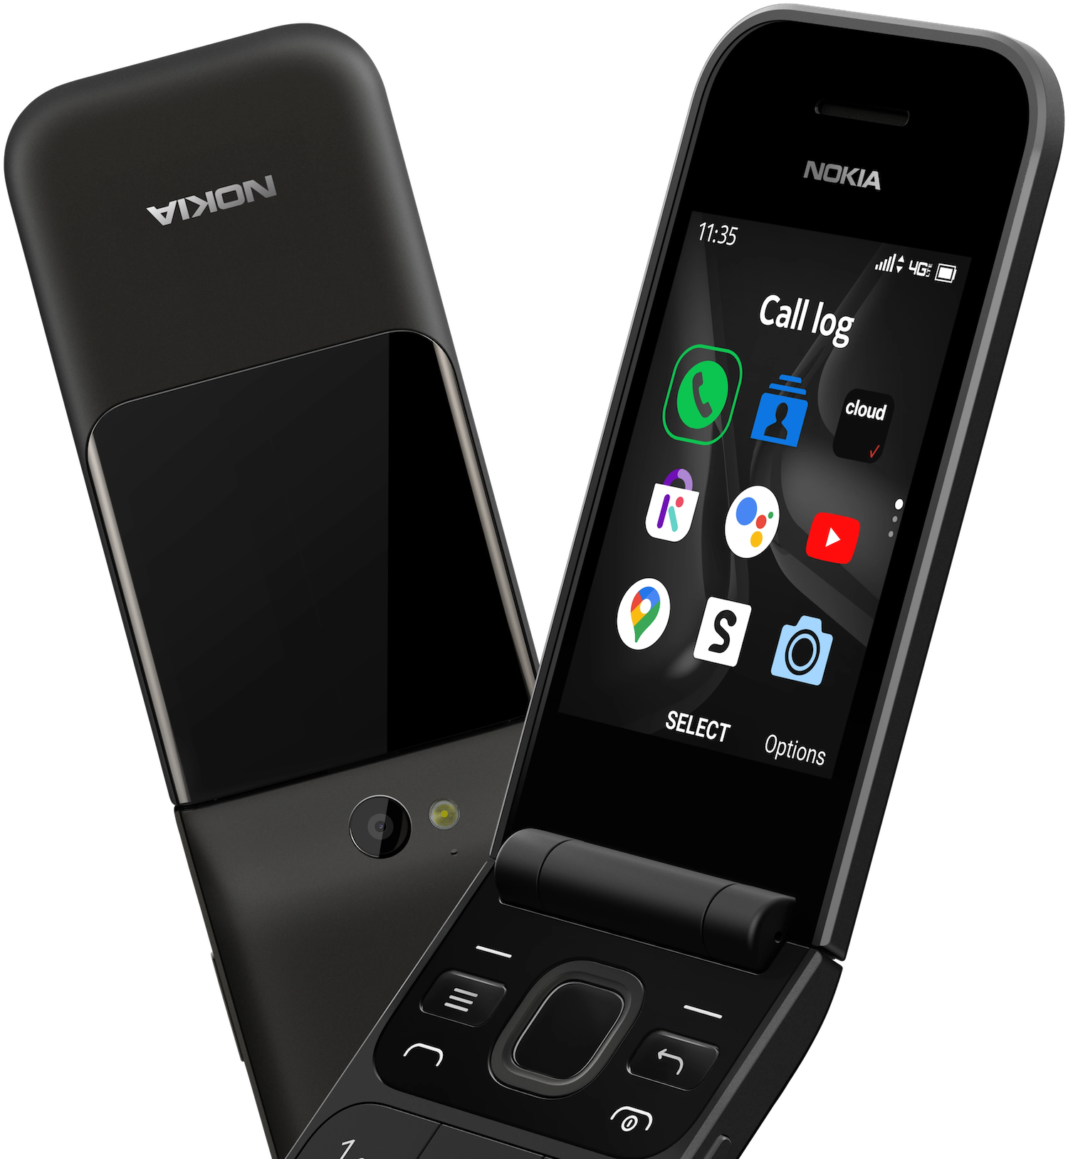 Nokia 2720 V Flip announced for 80; features KaiOS and Google